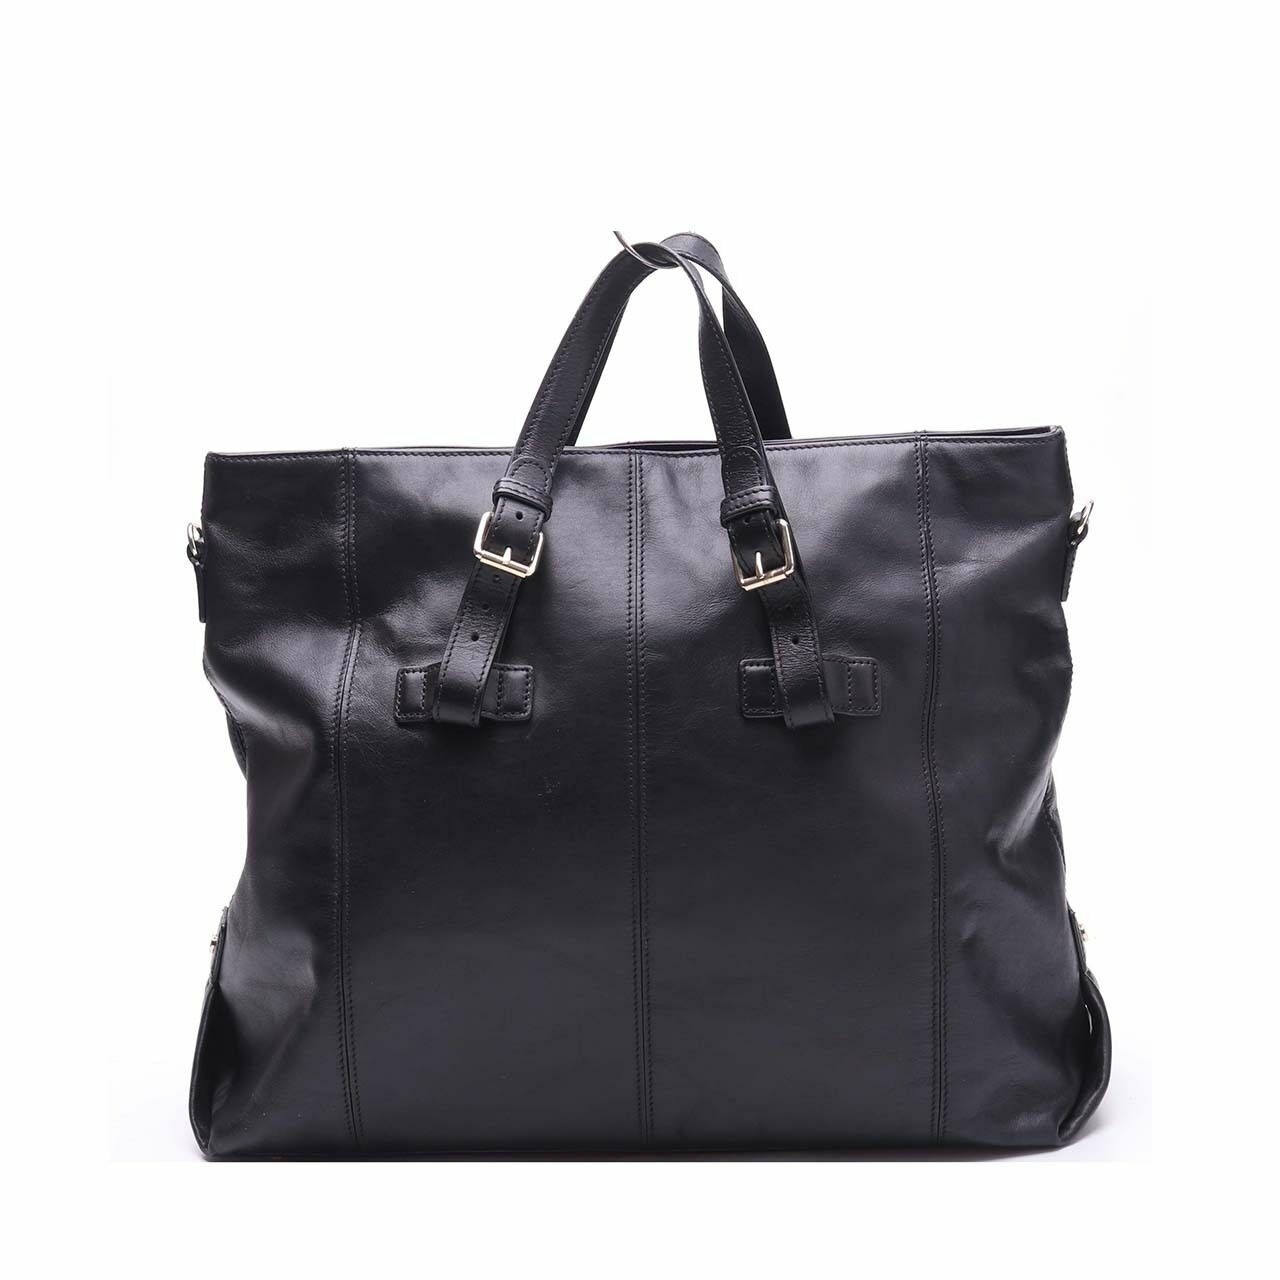 Aigner Black Leather Large Hand Bag